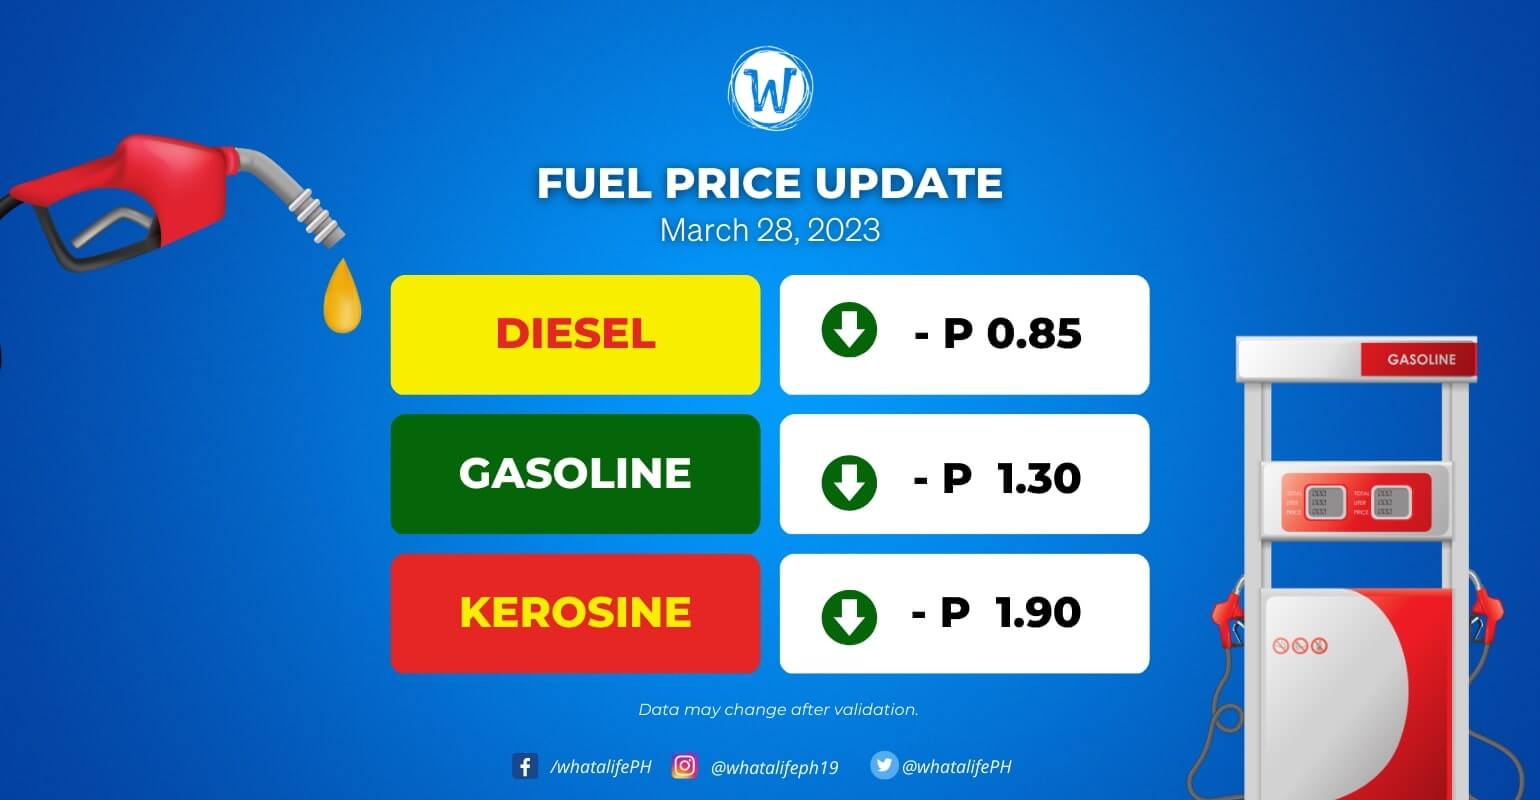 Fuel price adjustment effective March 28, 2023